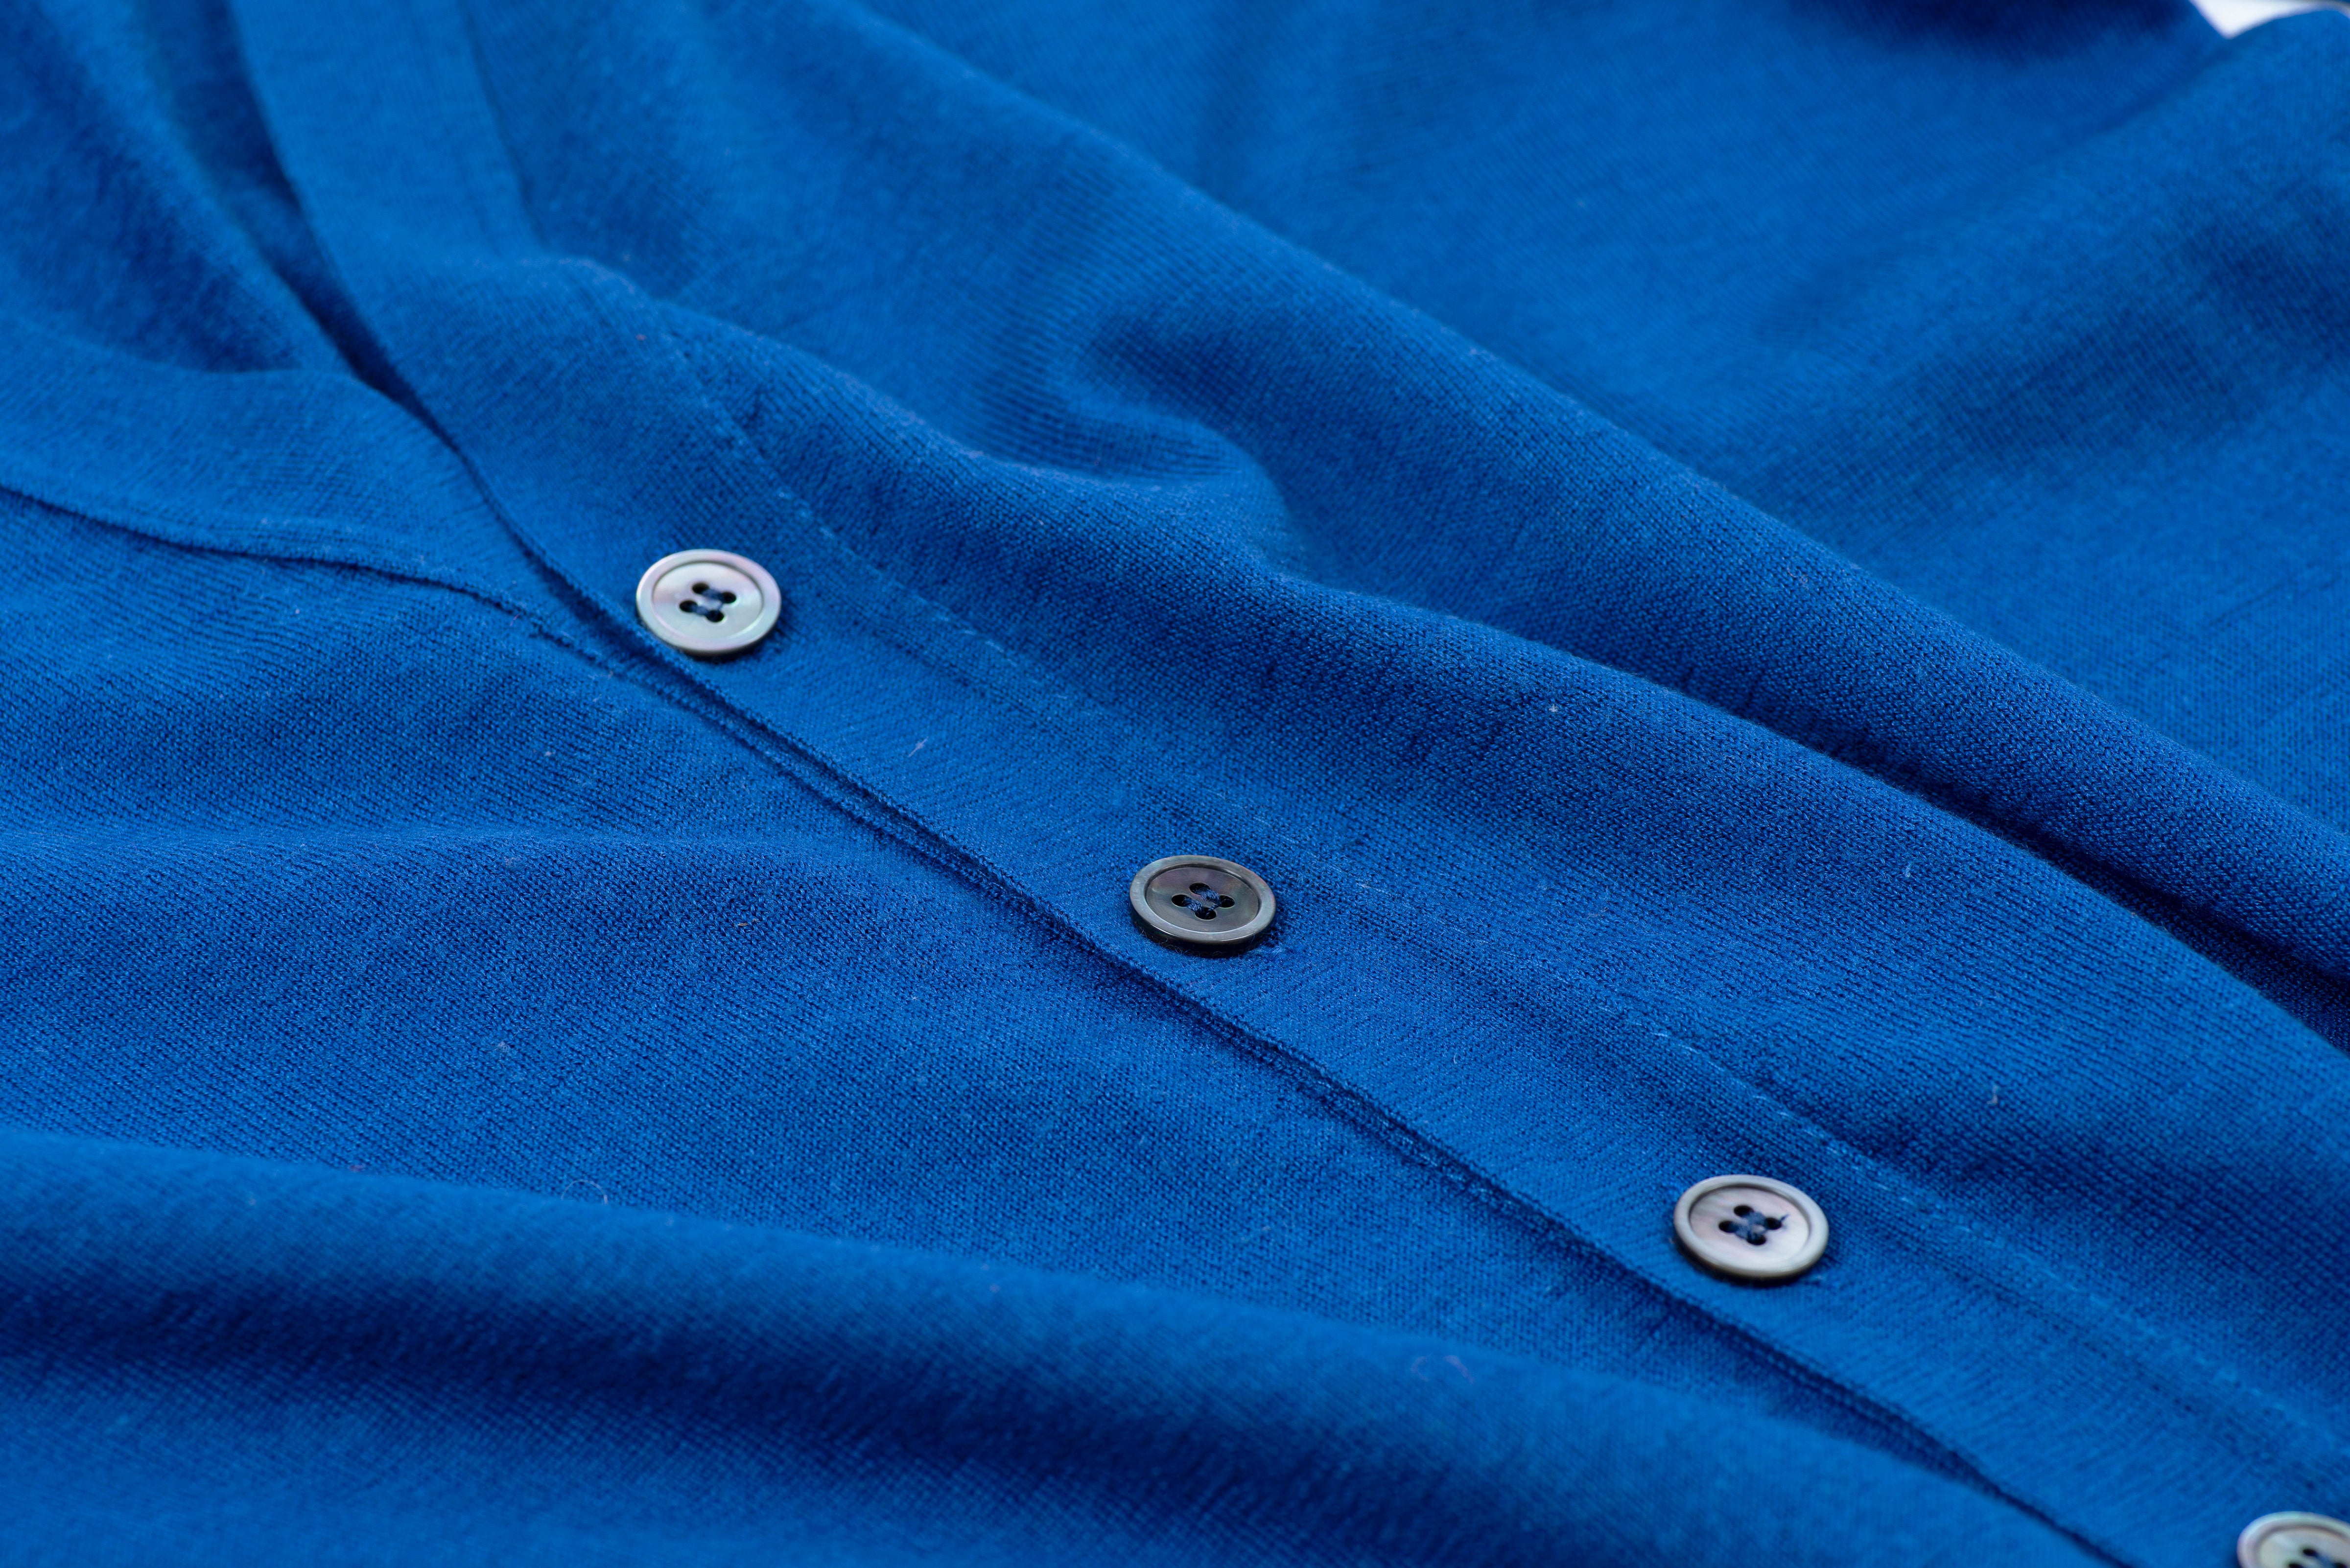 Andrea Fenzi Merino Wool & Silk Thin Knit Blue Cardigan, SIZE M